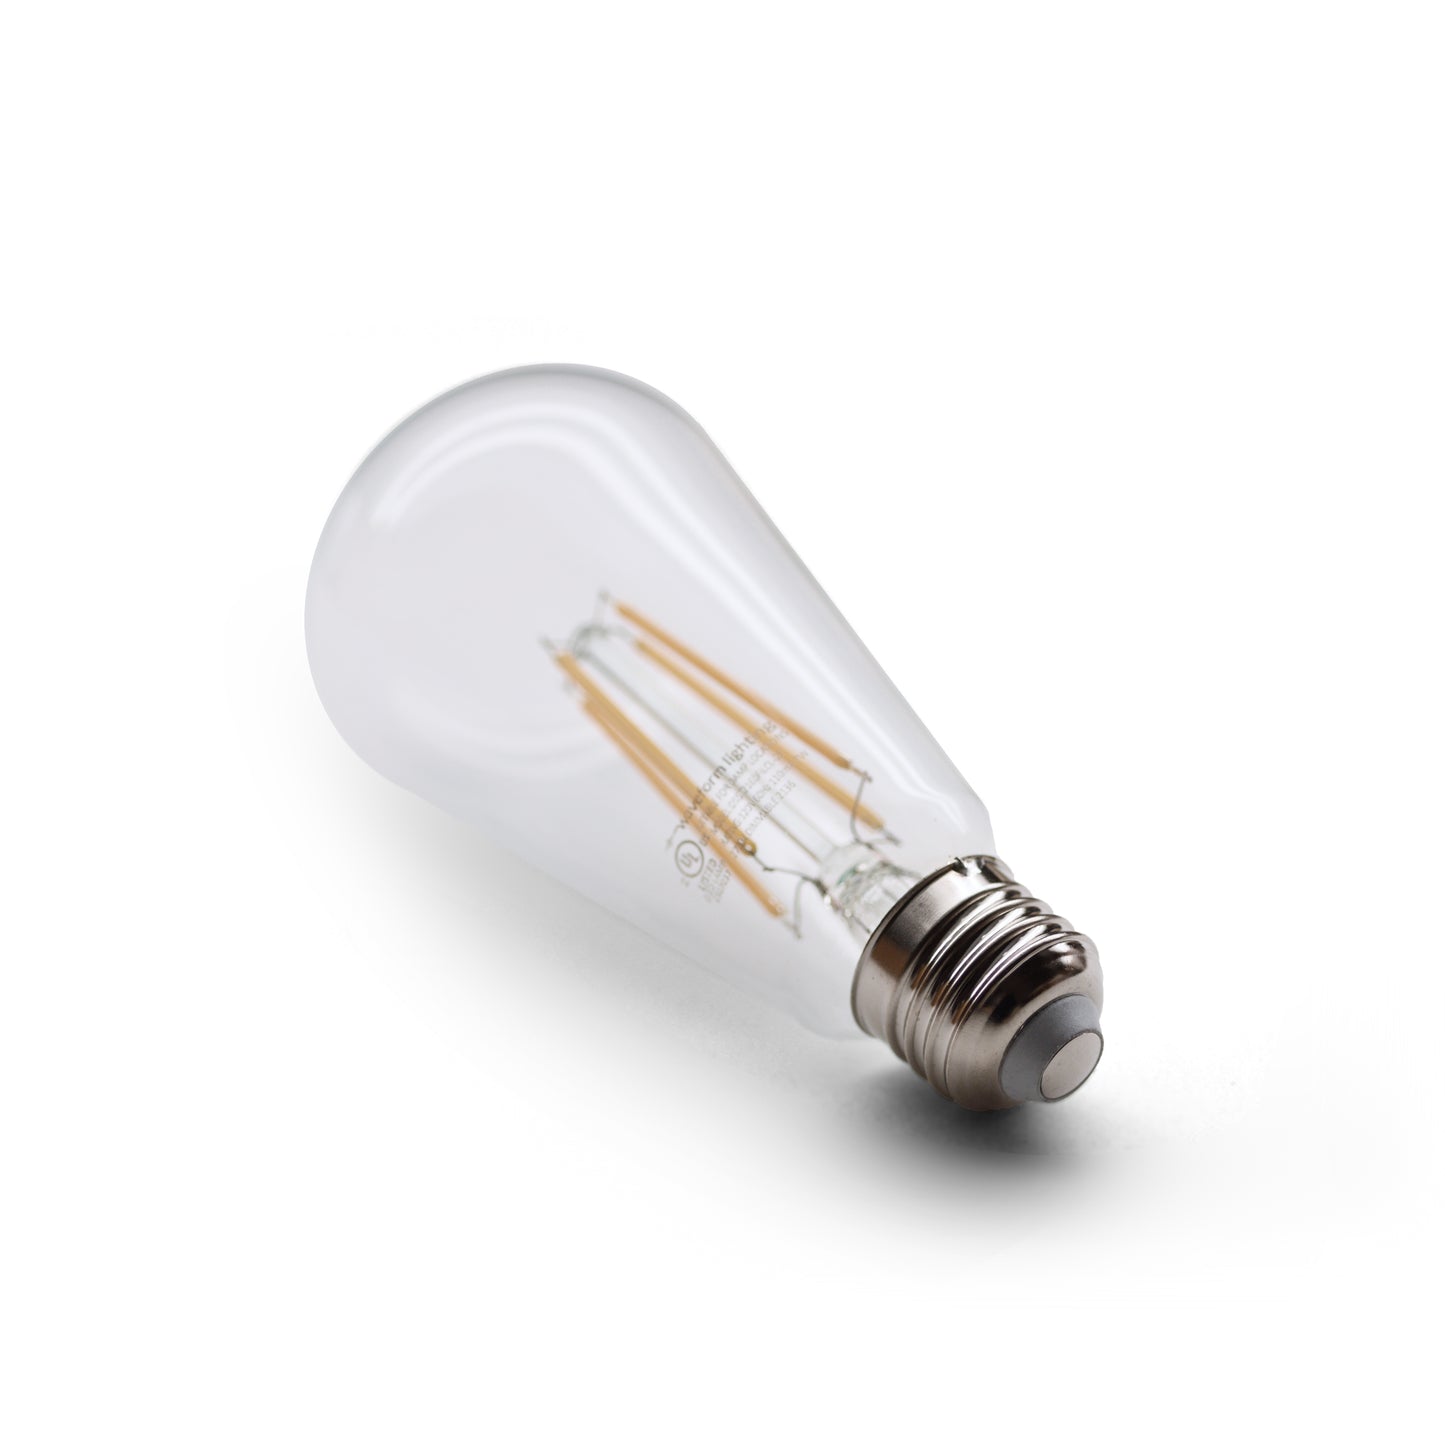 Ultra High 95 CRI ST21 LED Filament Bulb for Home & Residential